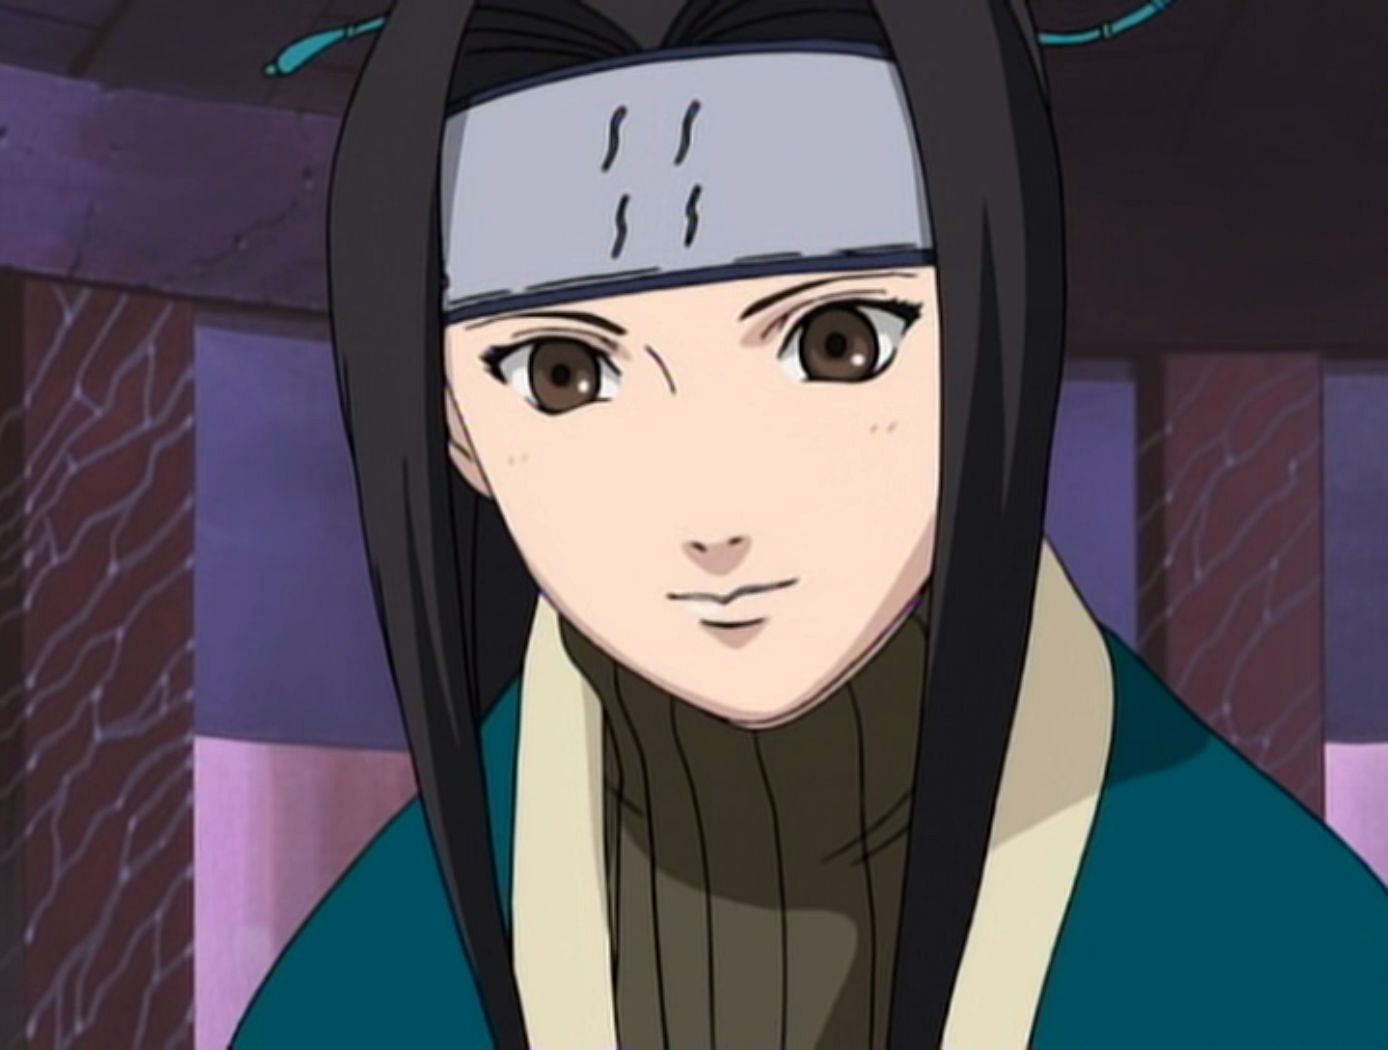 Haku as he appears in the &#039;Naruto&#039; anime (Image via Pierrot)